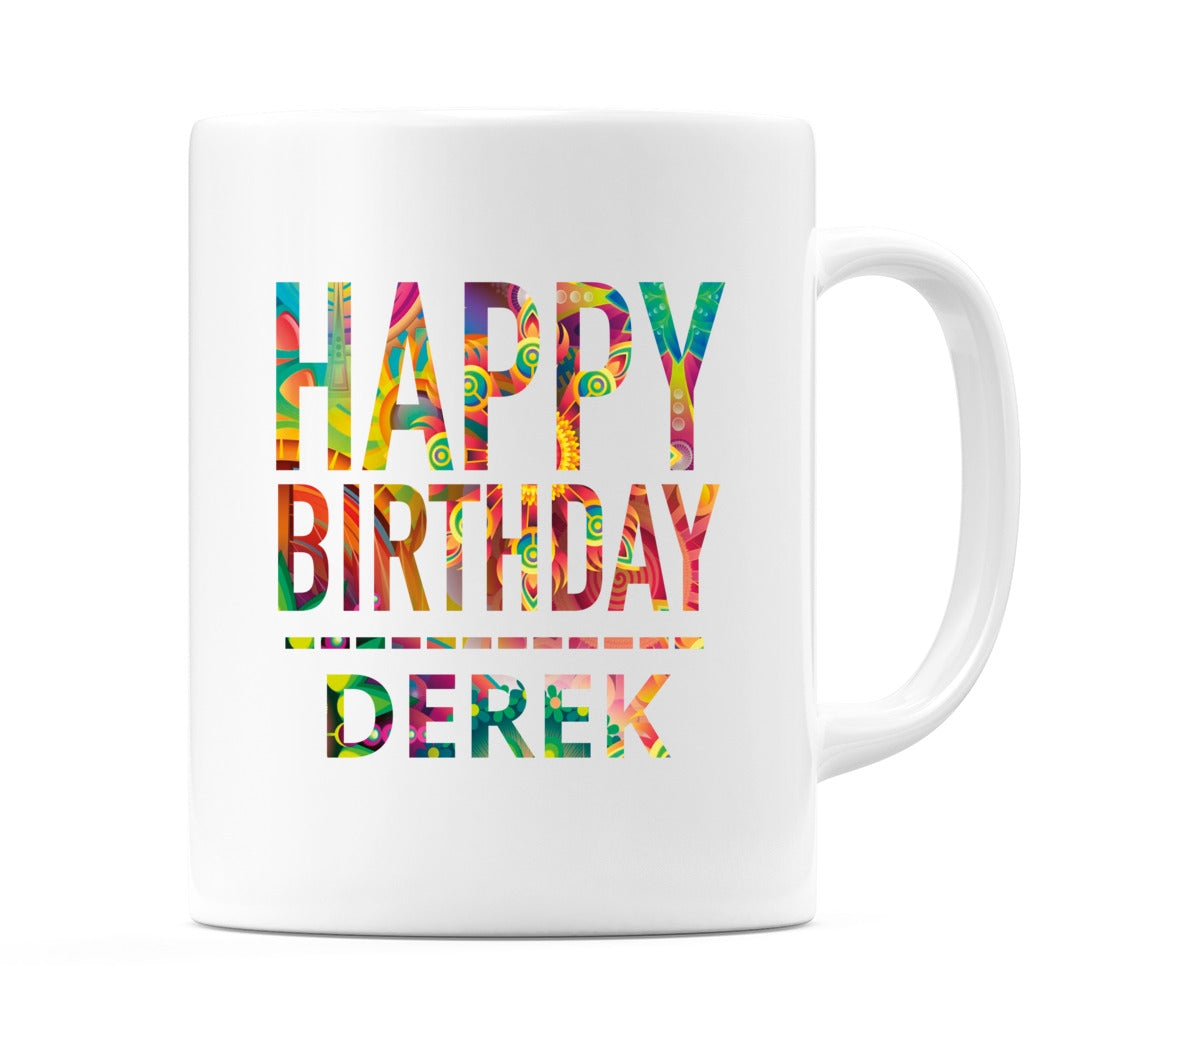 Happy Birthday Derek (Tie Dye Effect) Mug Cup by WeDoMugs